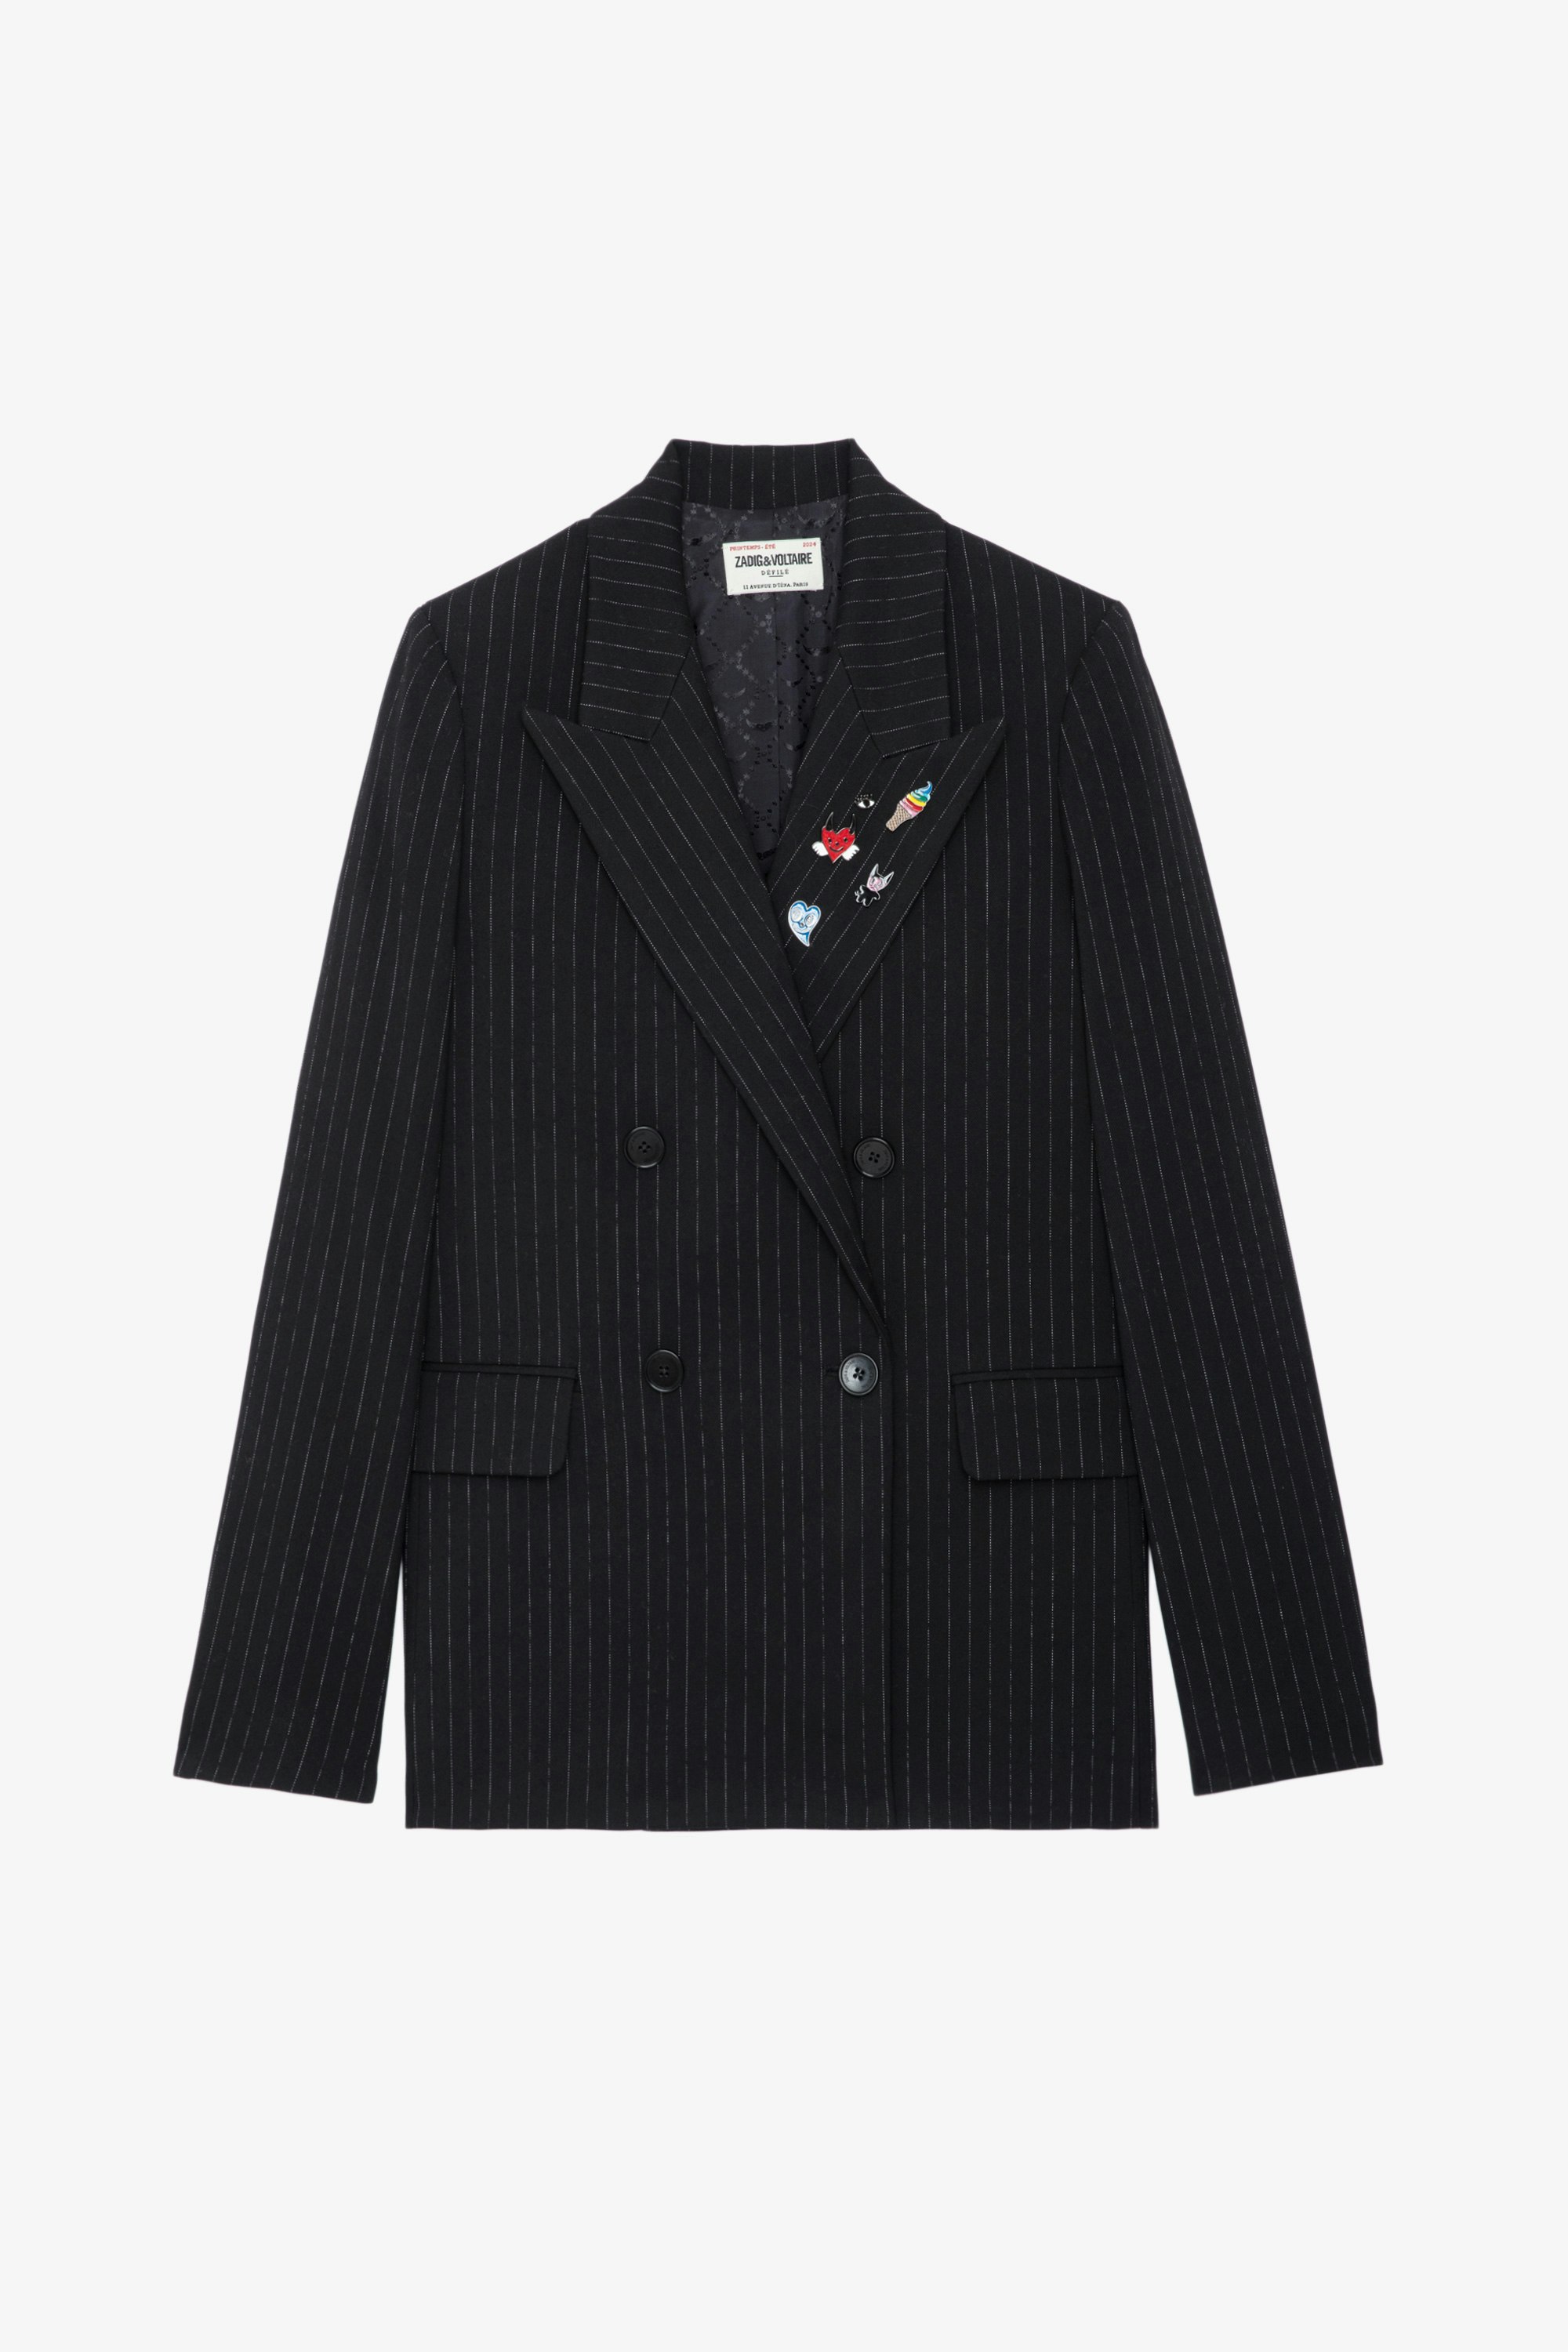 Valdo Blazer - Black straight-cut oversized blazer with pinstripes and customised badges designed by Humberto Cruz.